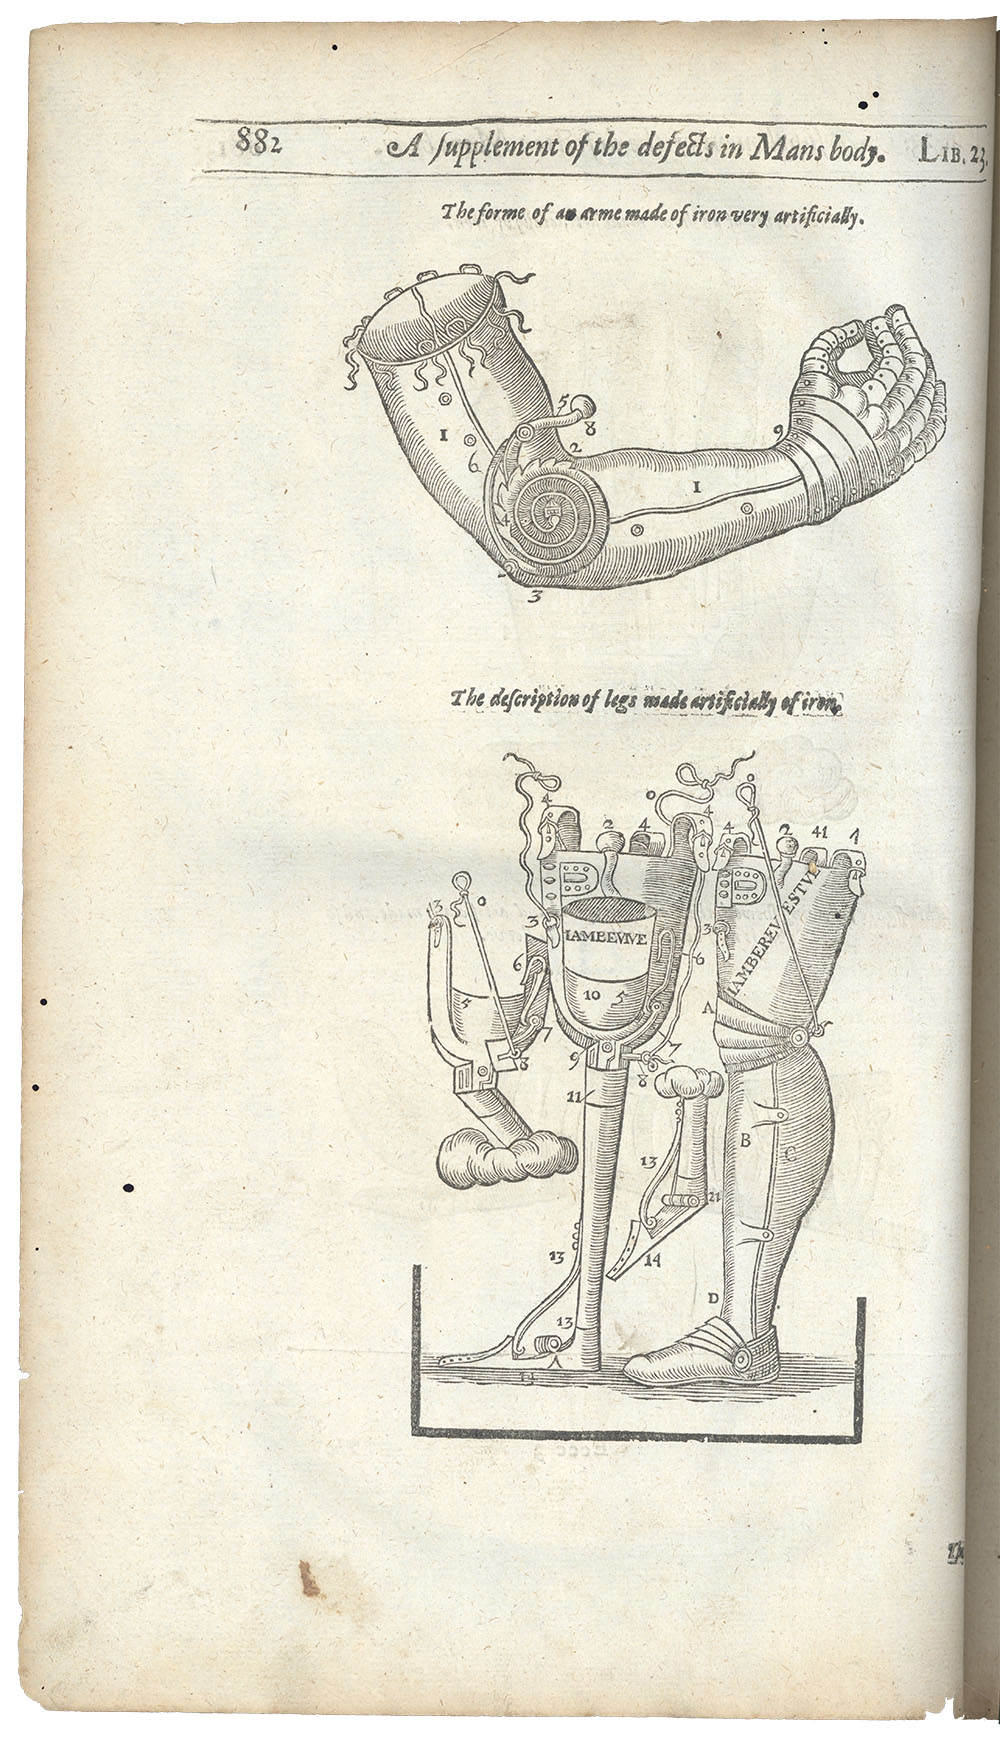 <p>Page 882. Image of 17th century prosthetic limb.</p>
